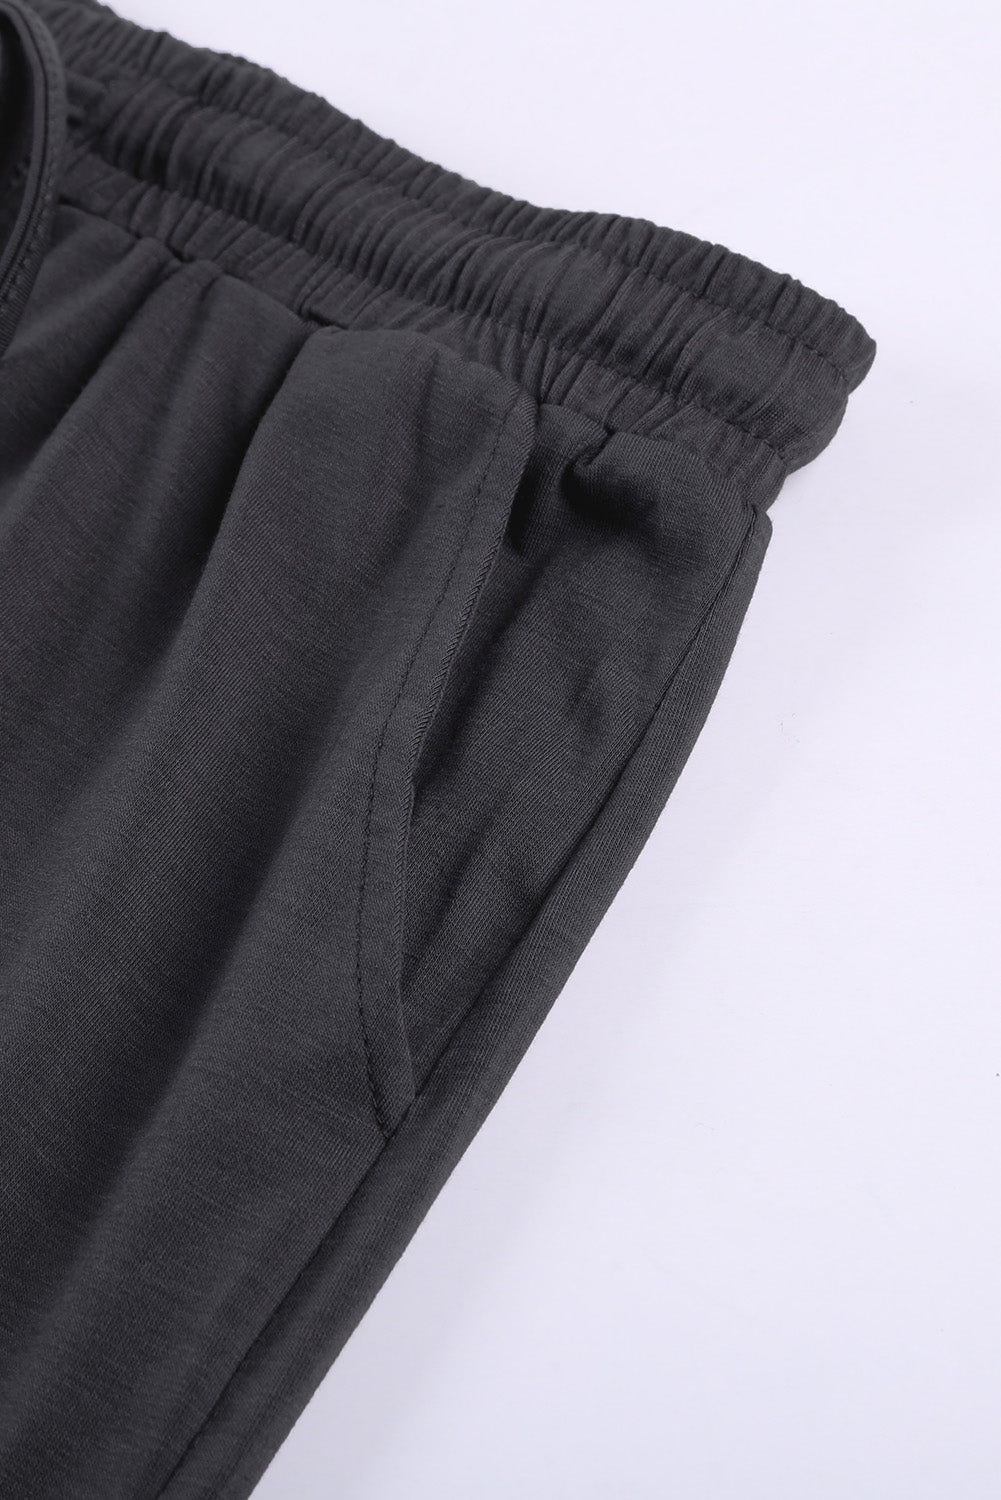 Gray Black/Green/Gray/Beige Raglan Top and Shorts Knit Lounge Set LC4511177-11